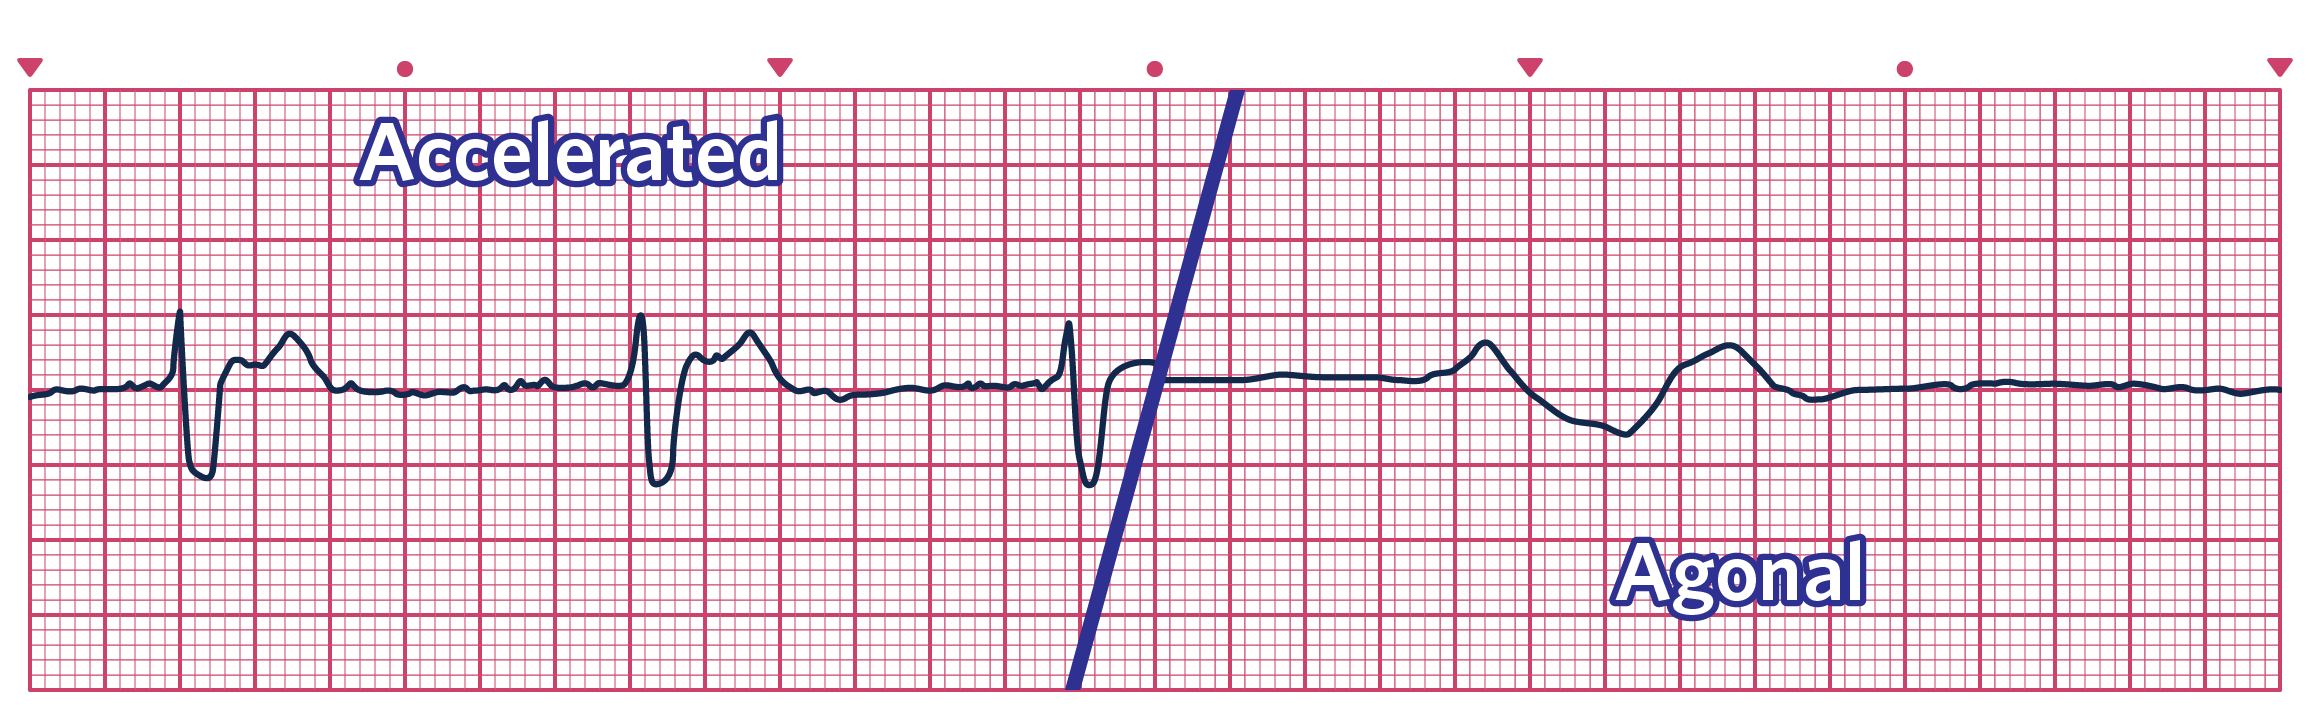 An ECG depicting Idioventricular Rhythms